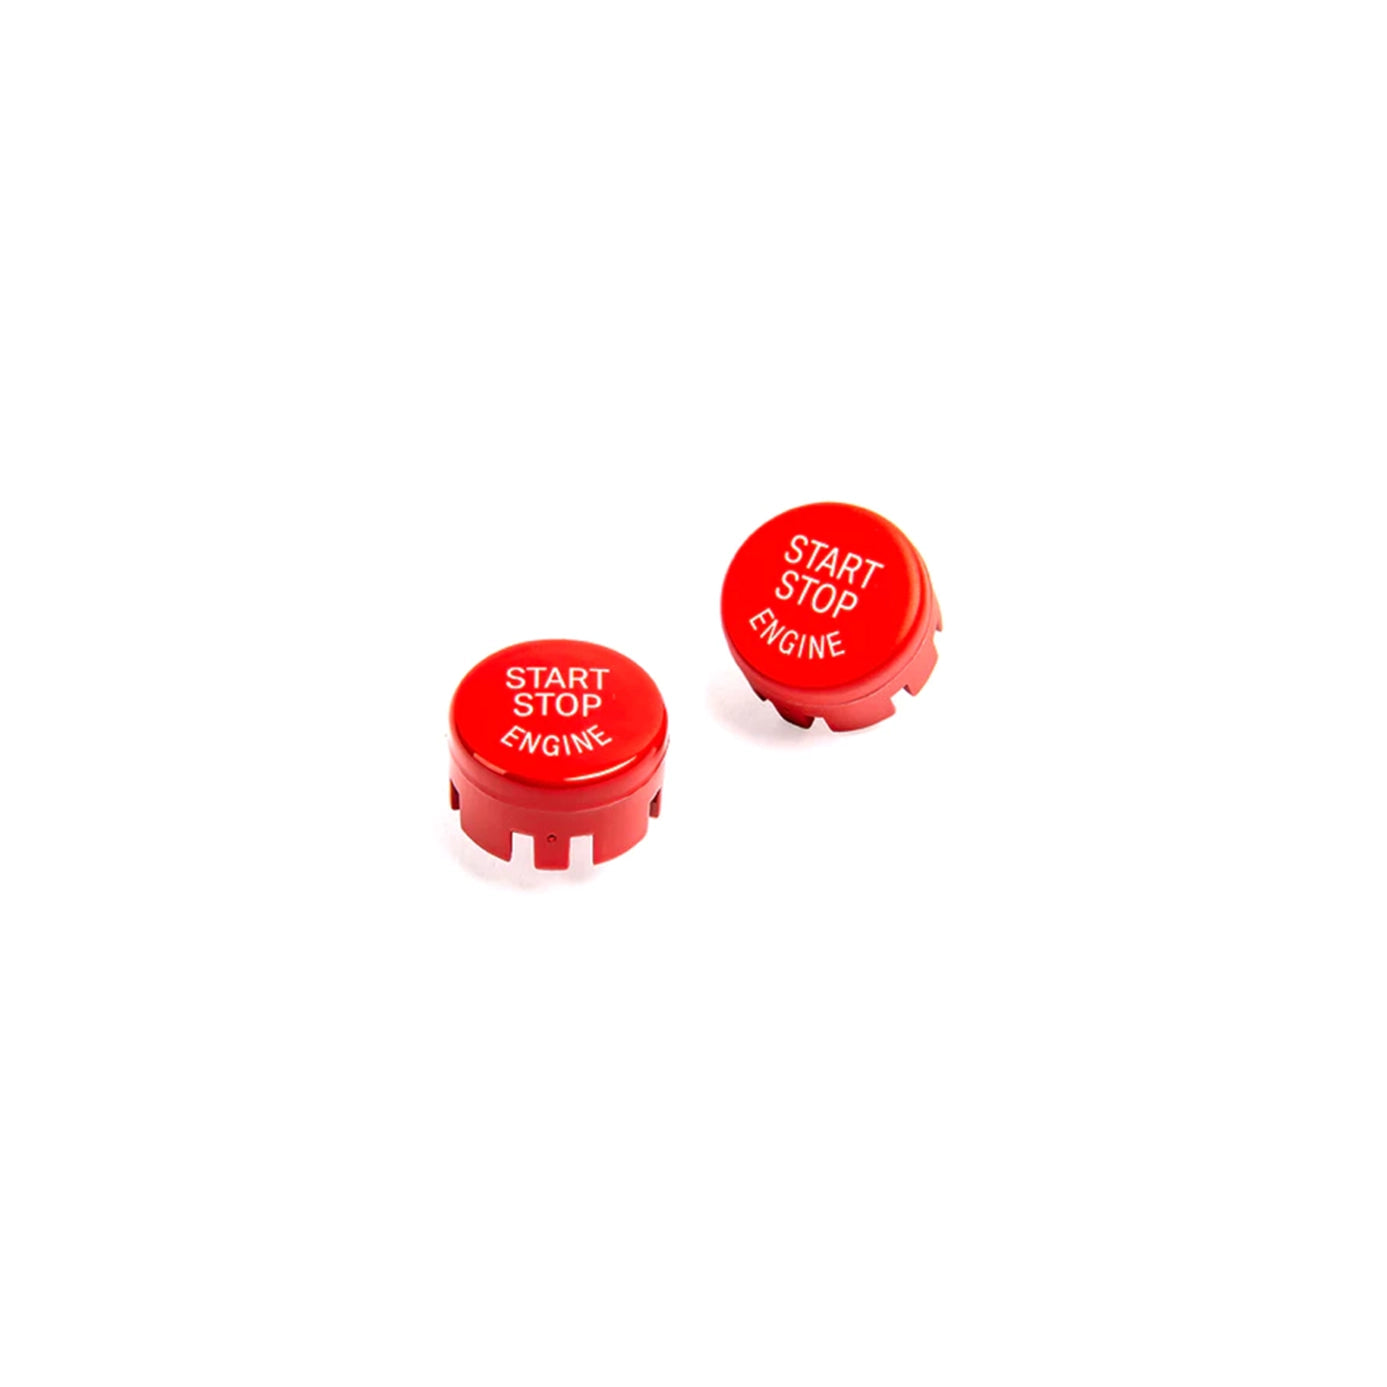 Autotecknic Bright Red Start Stop Button - F32/ F33/ F36 4-Series